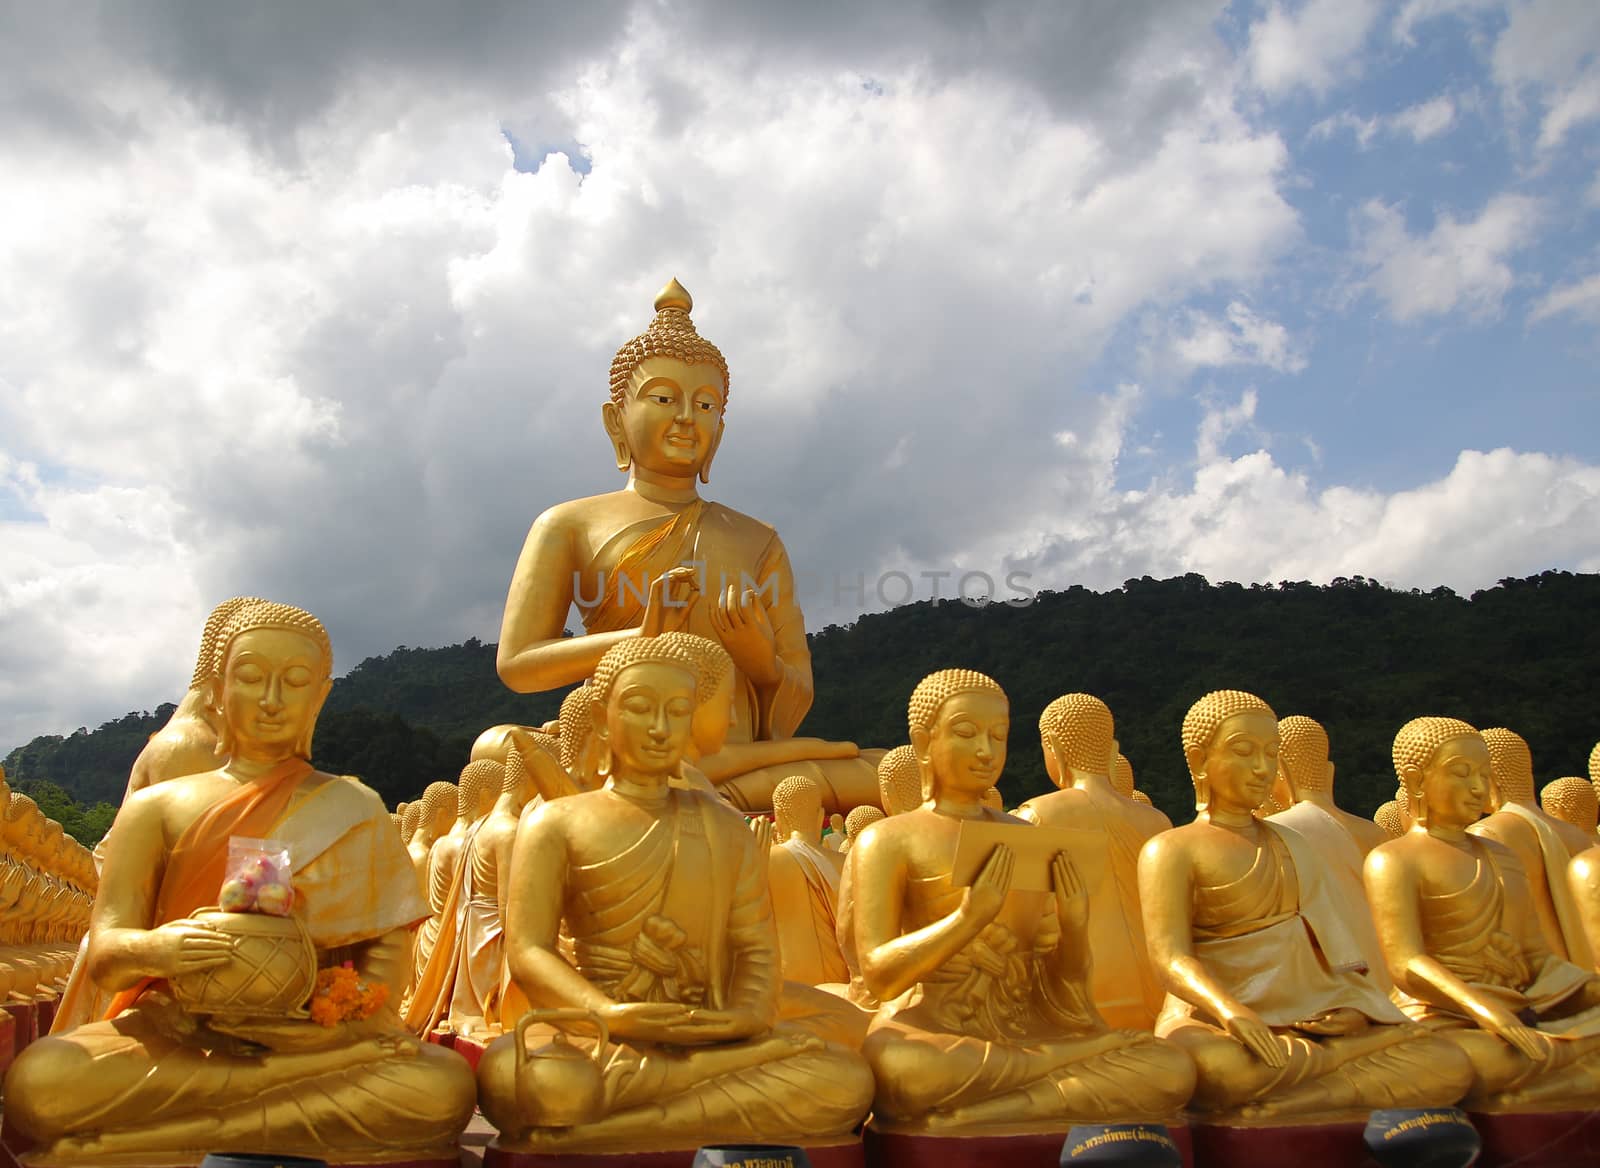 Aligned statues of Buddha